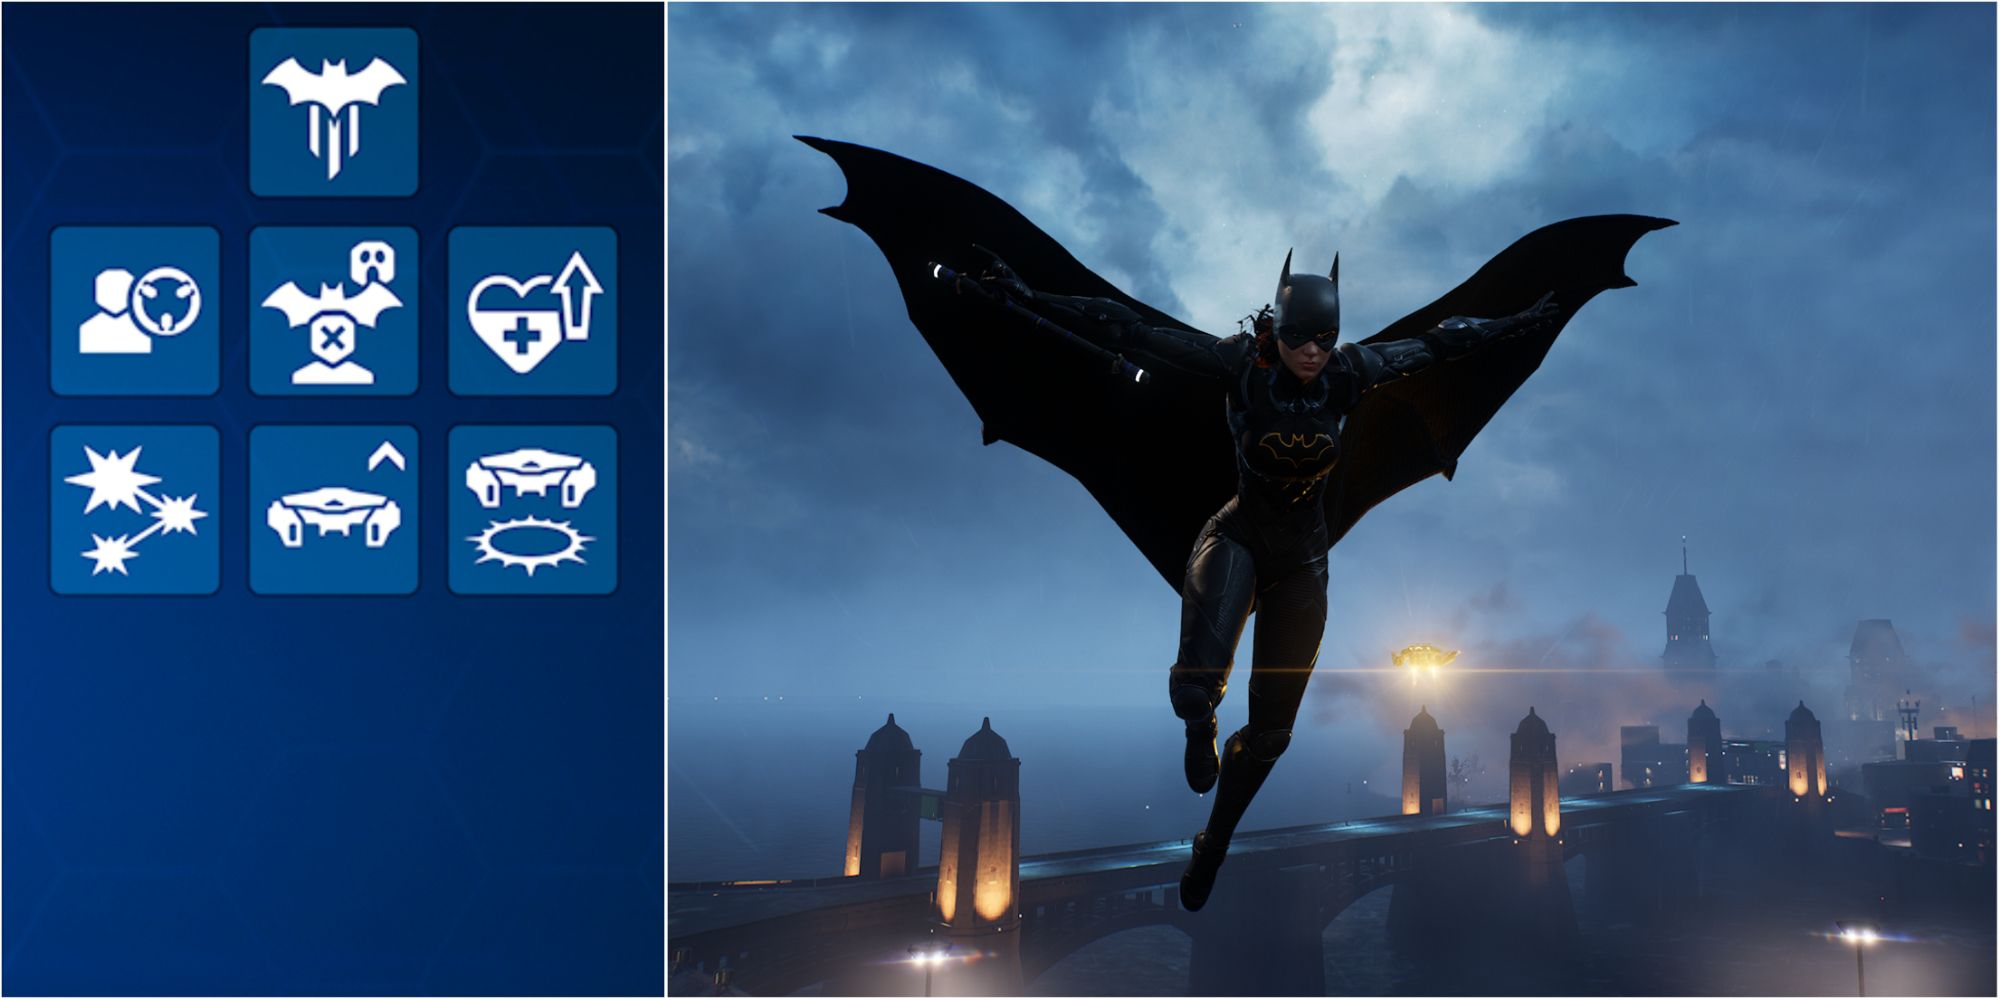 Gotham Knights Split Image Of Knighthood Skill Tree And Batgirl